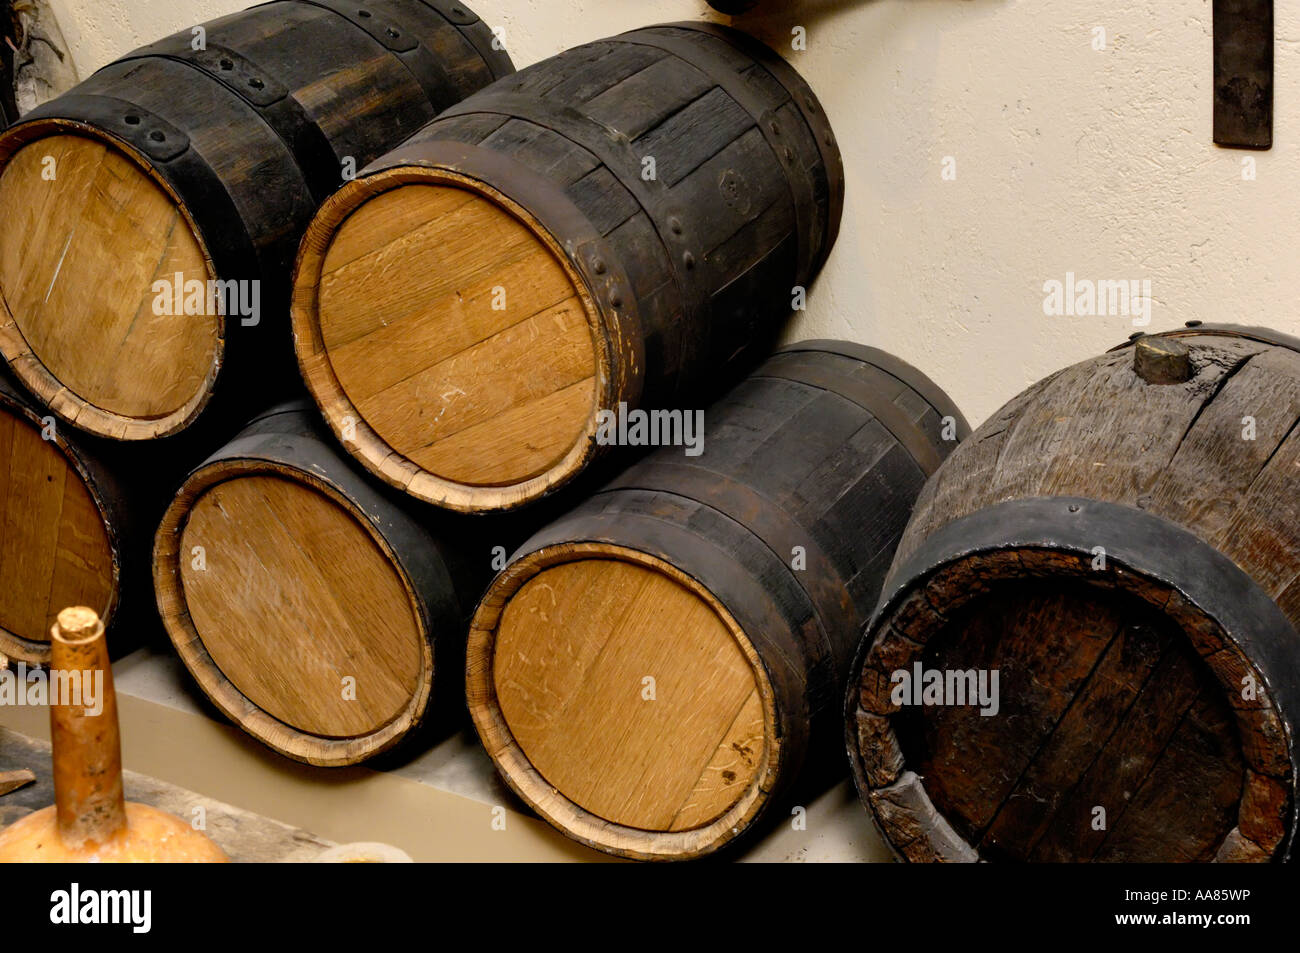 Wooden wine barrels Stock Photo